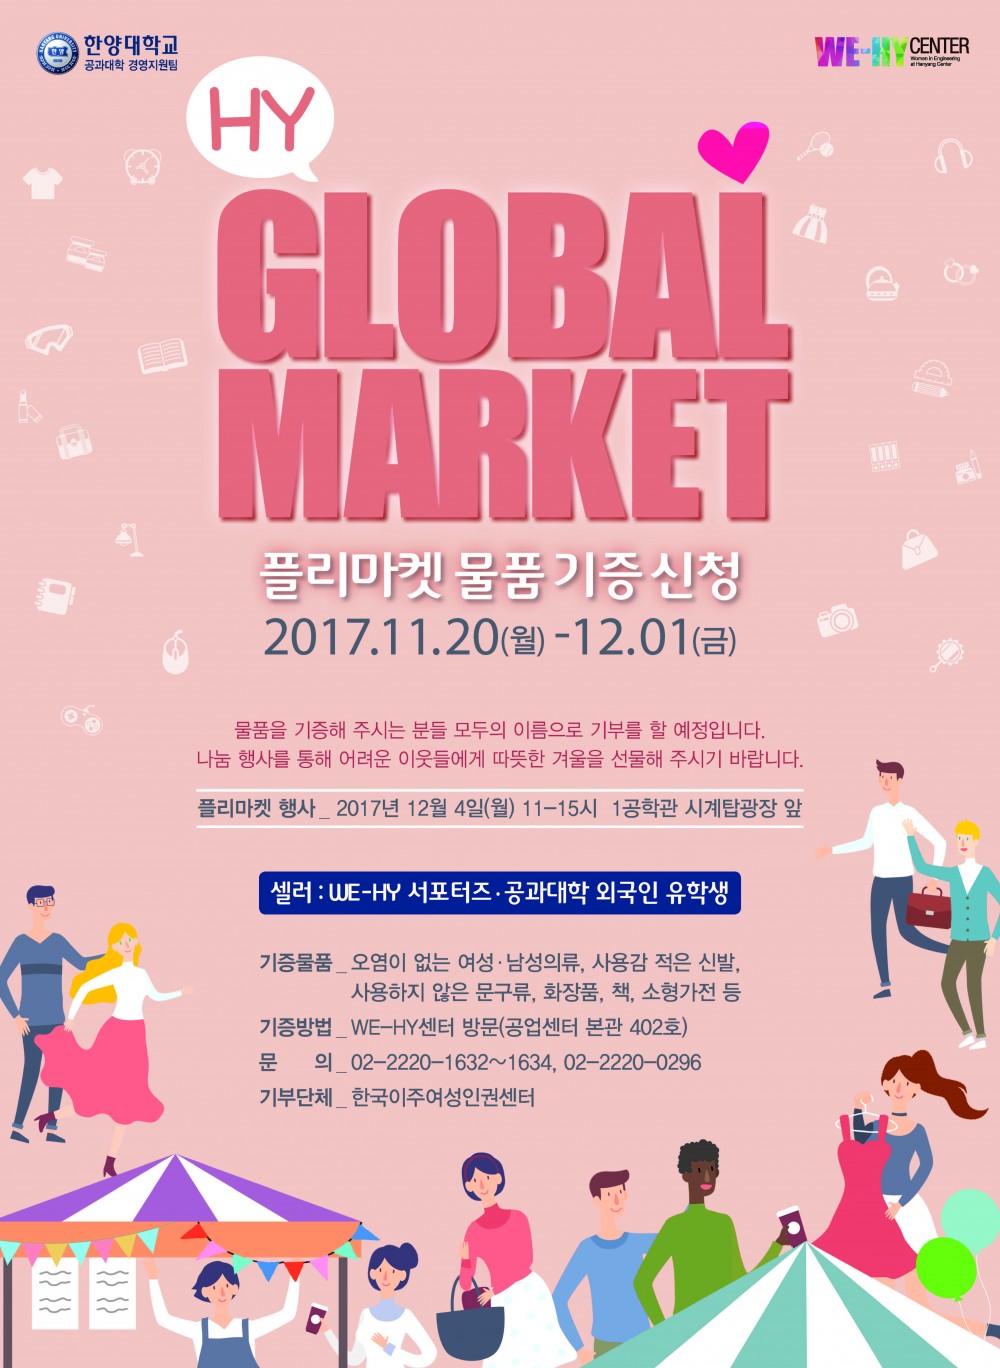 HY Global Market 국영문 포스터